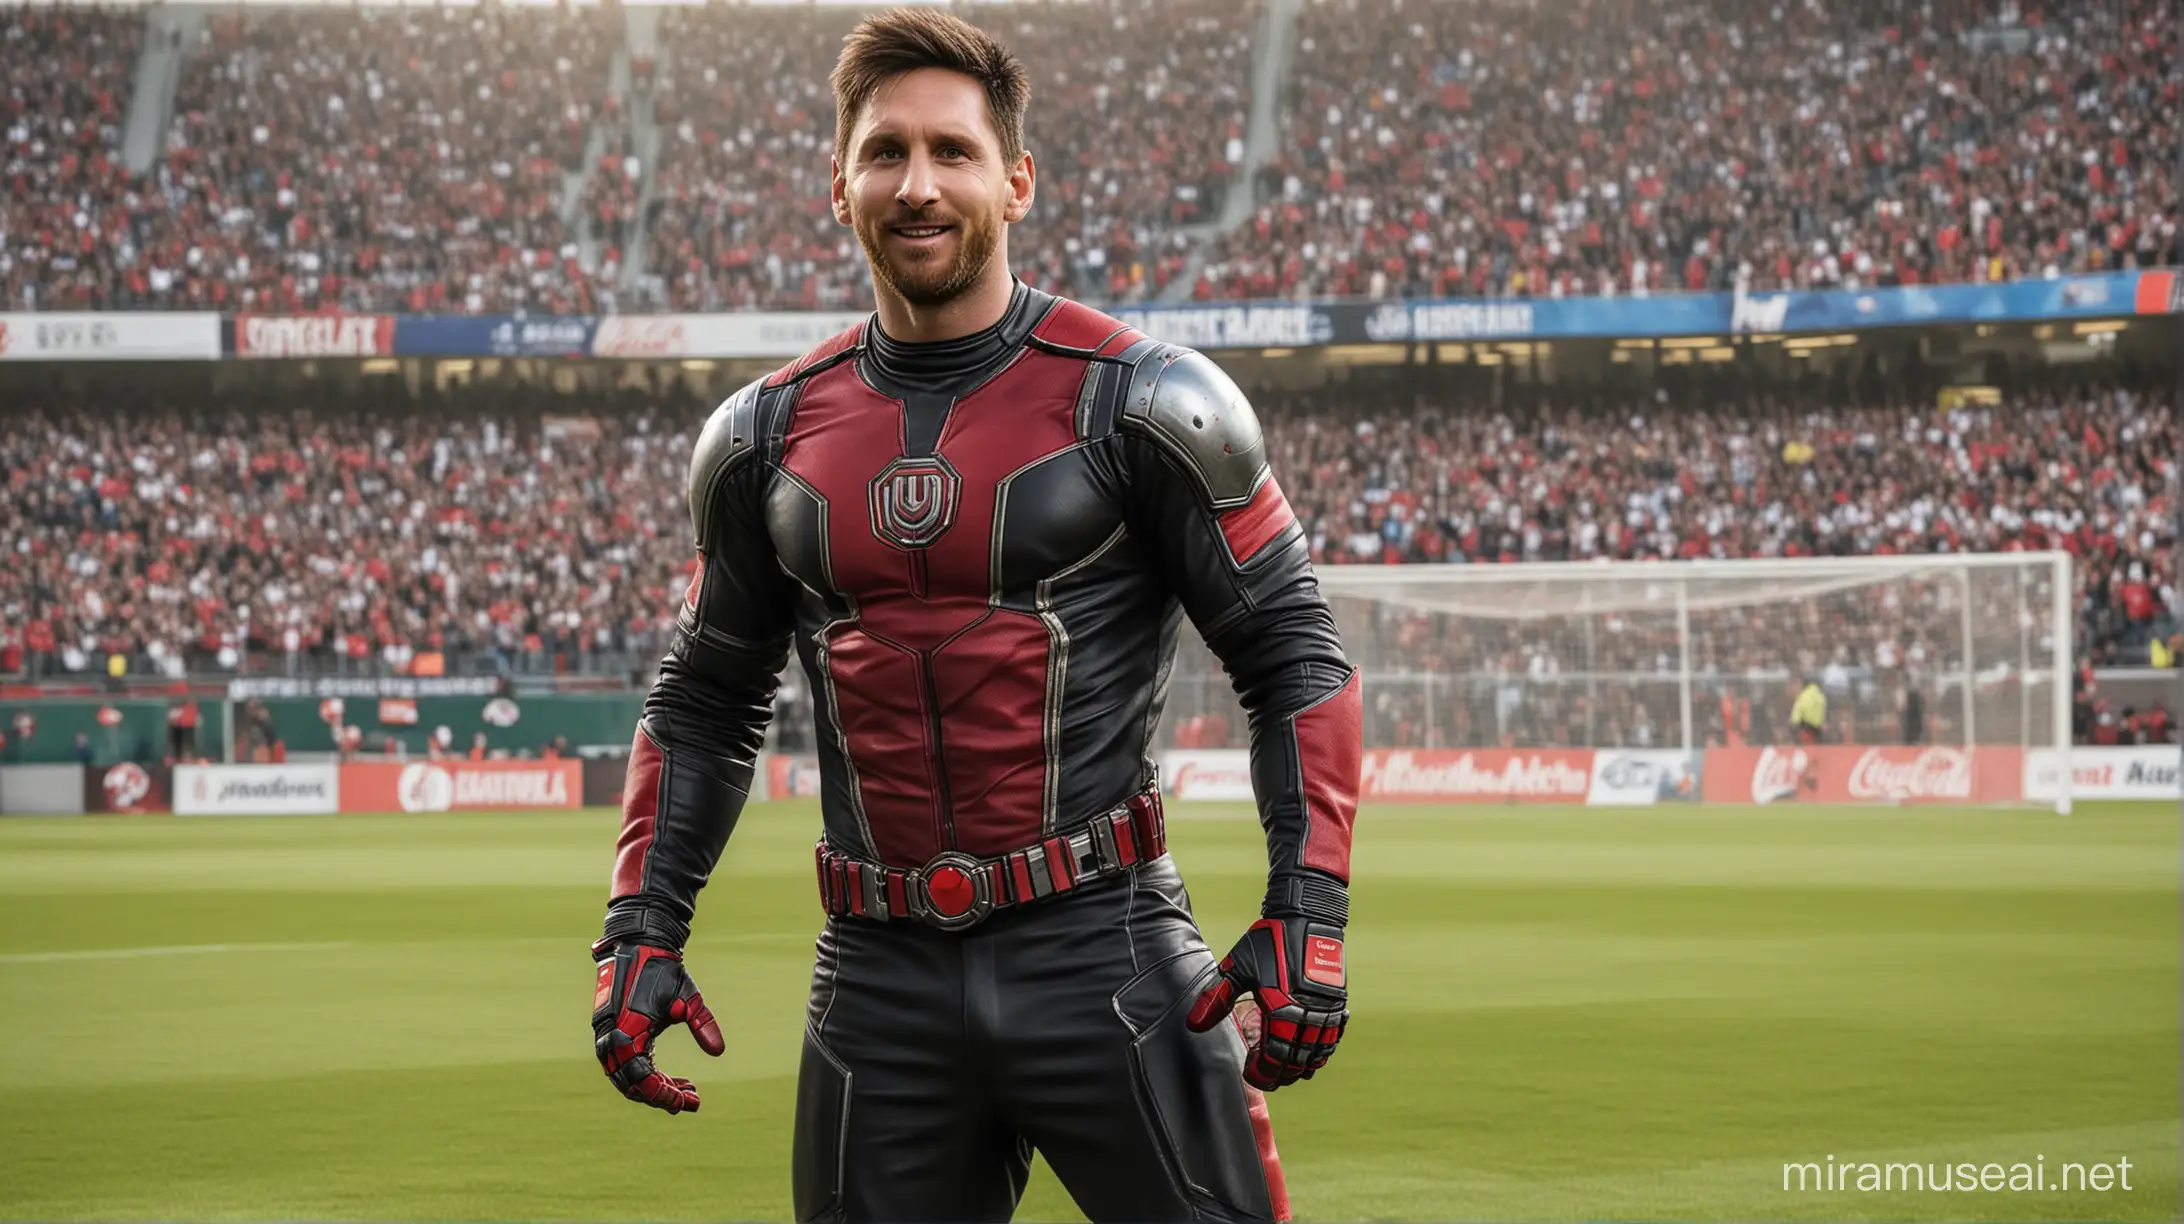 Lionel Messi Transforms into AntMan Soccer Superhero Smiles on Field